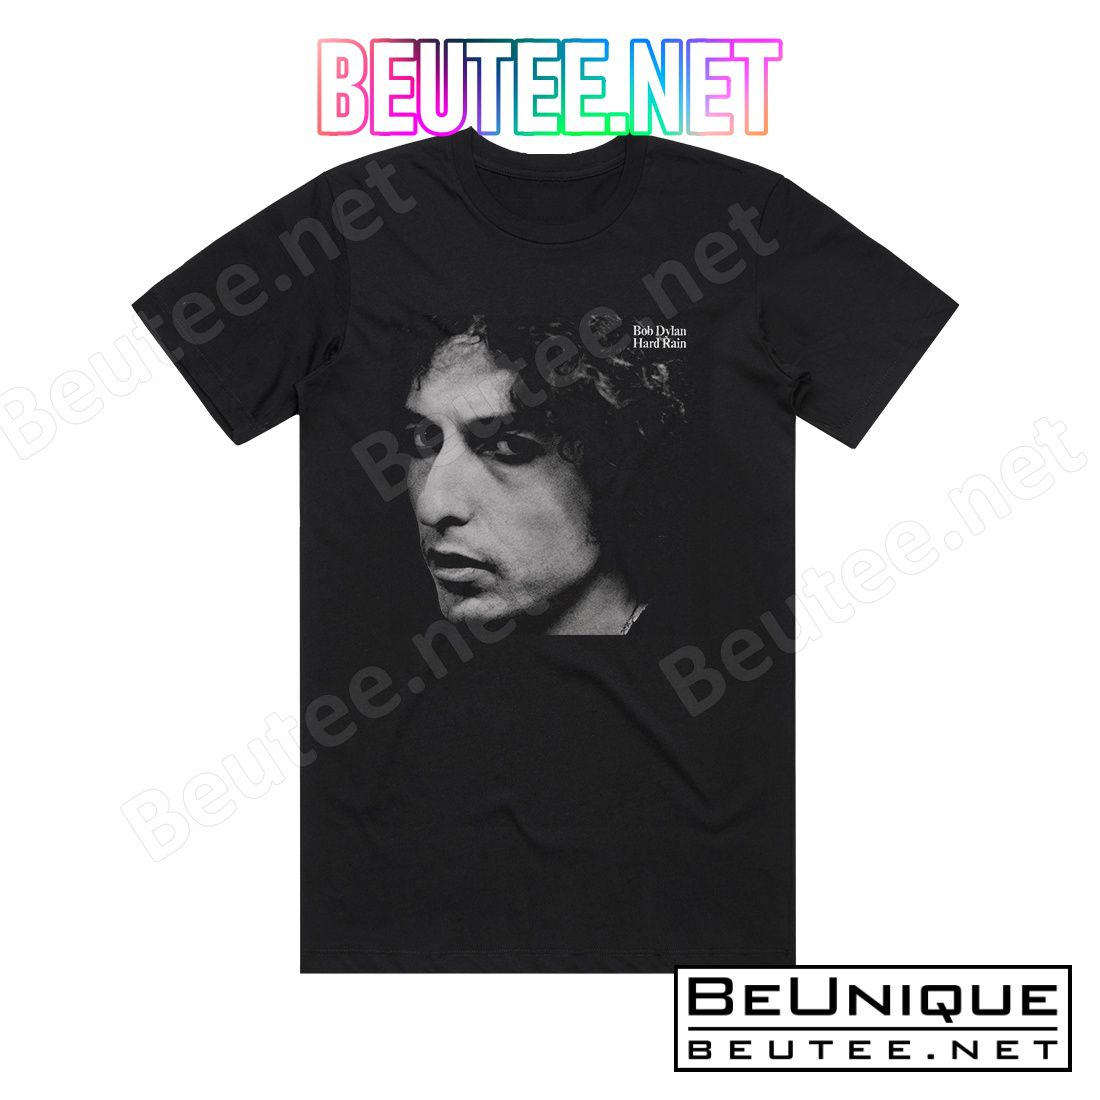 Bob Dylan Hard Rain Album Cover T-Shirt